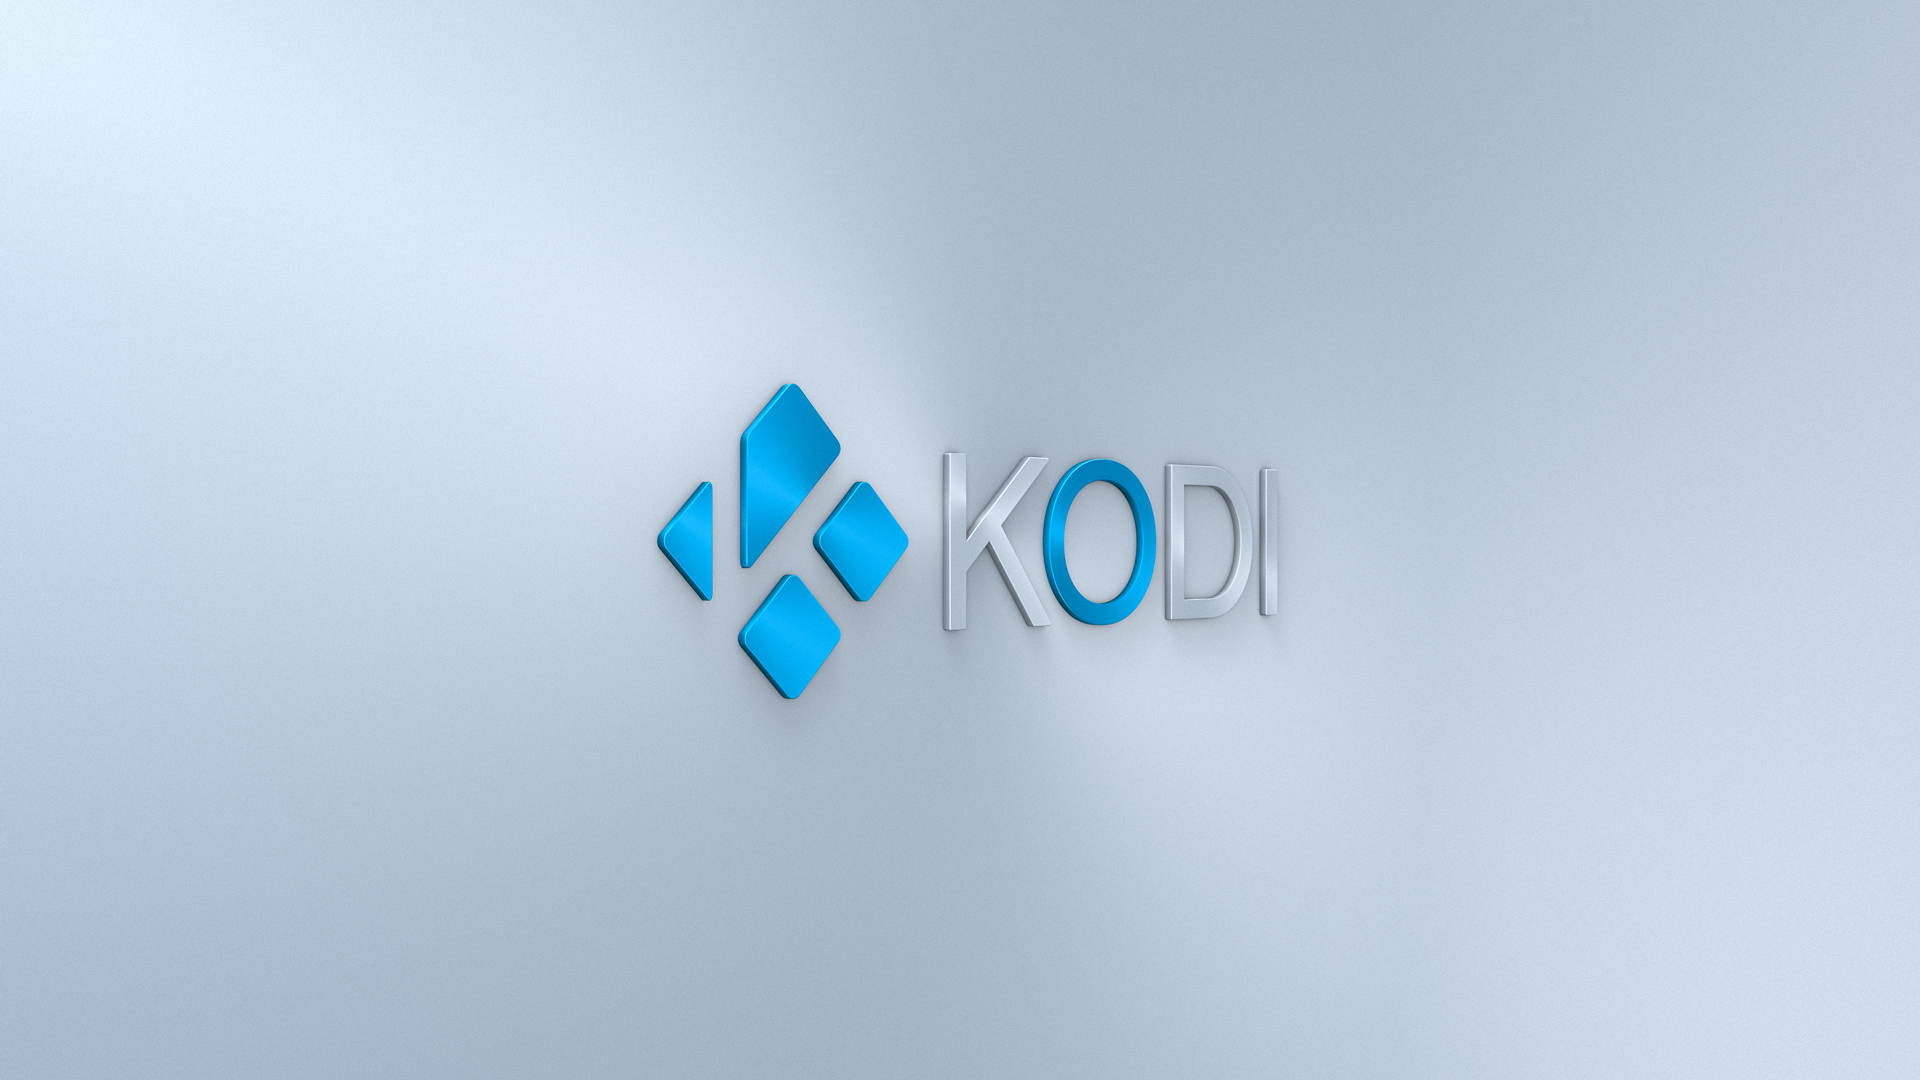 Kodi Wallpapers